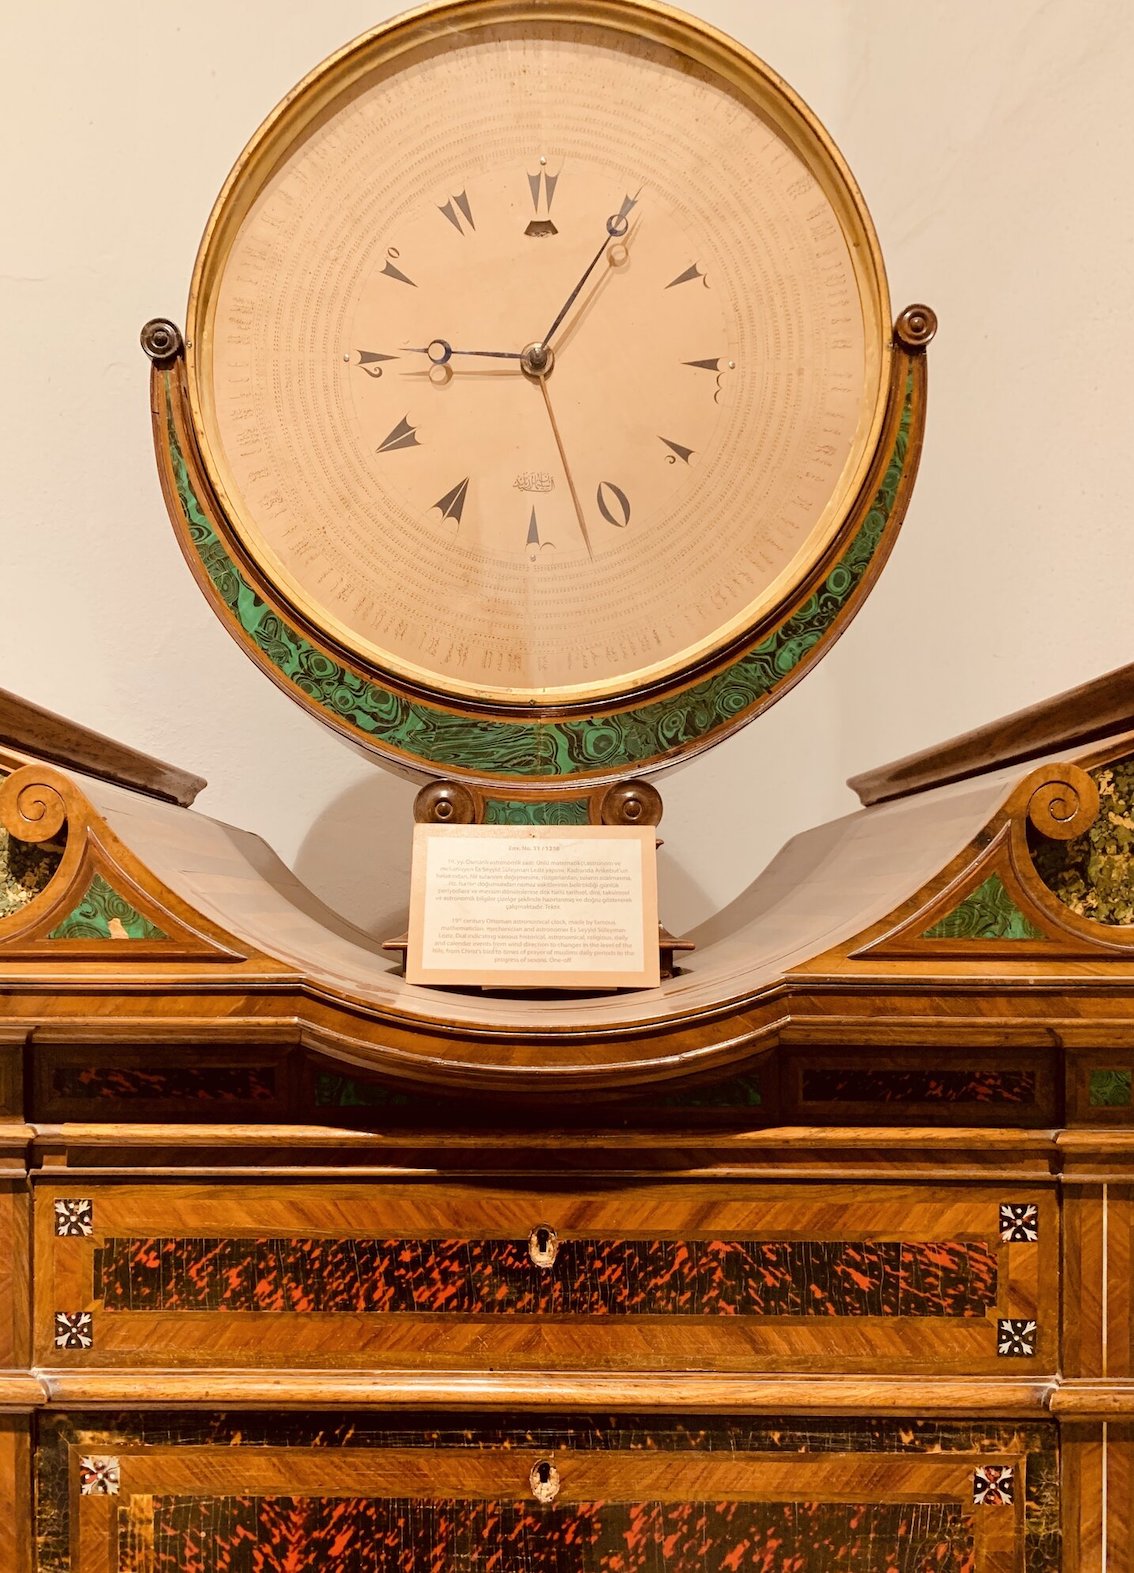 19th century Ottoman Astronomical Clock.